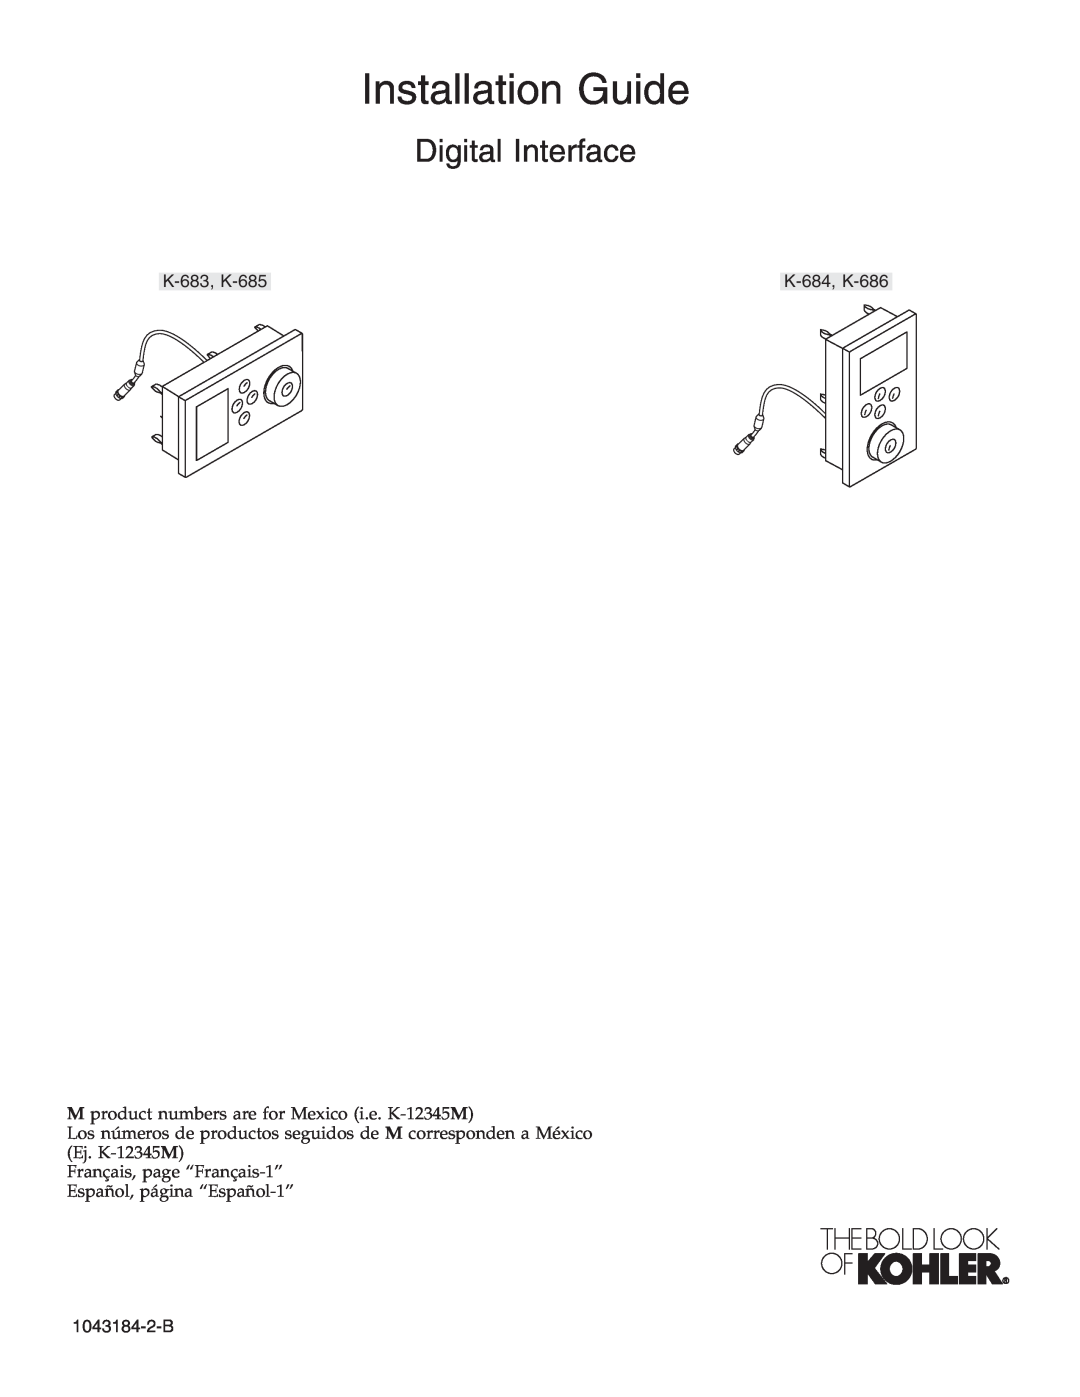 Kohler K-683, K-684, K-686, K-685 manual Installation Guide, Digital Interface 